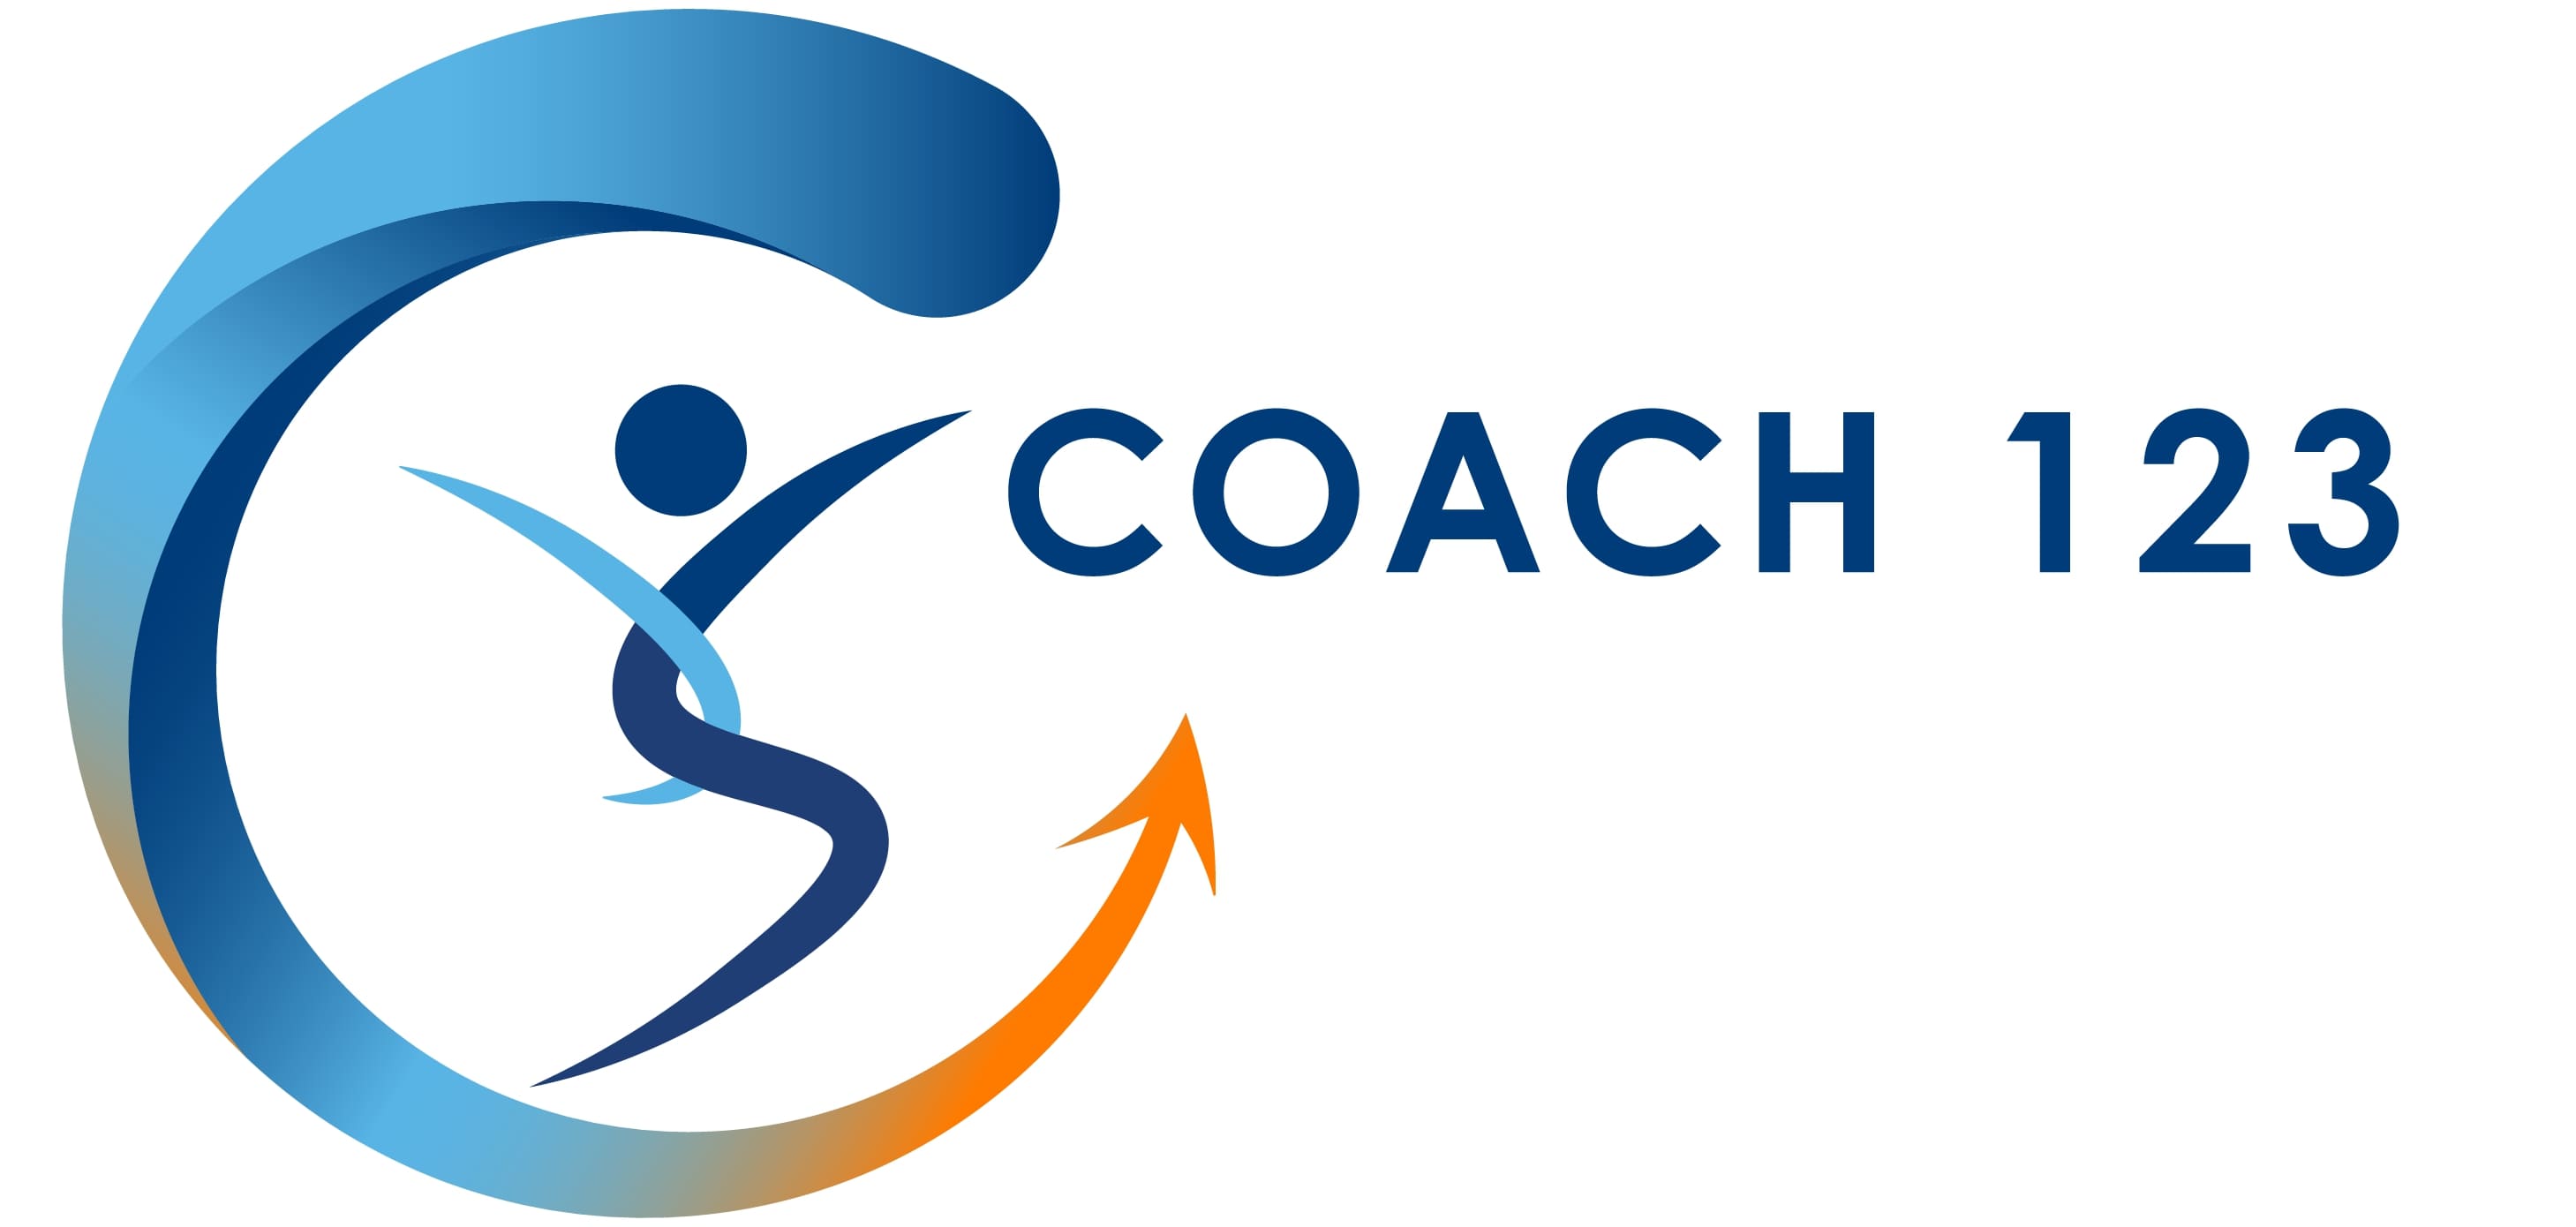 Coaching Services - Coach-123